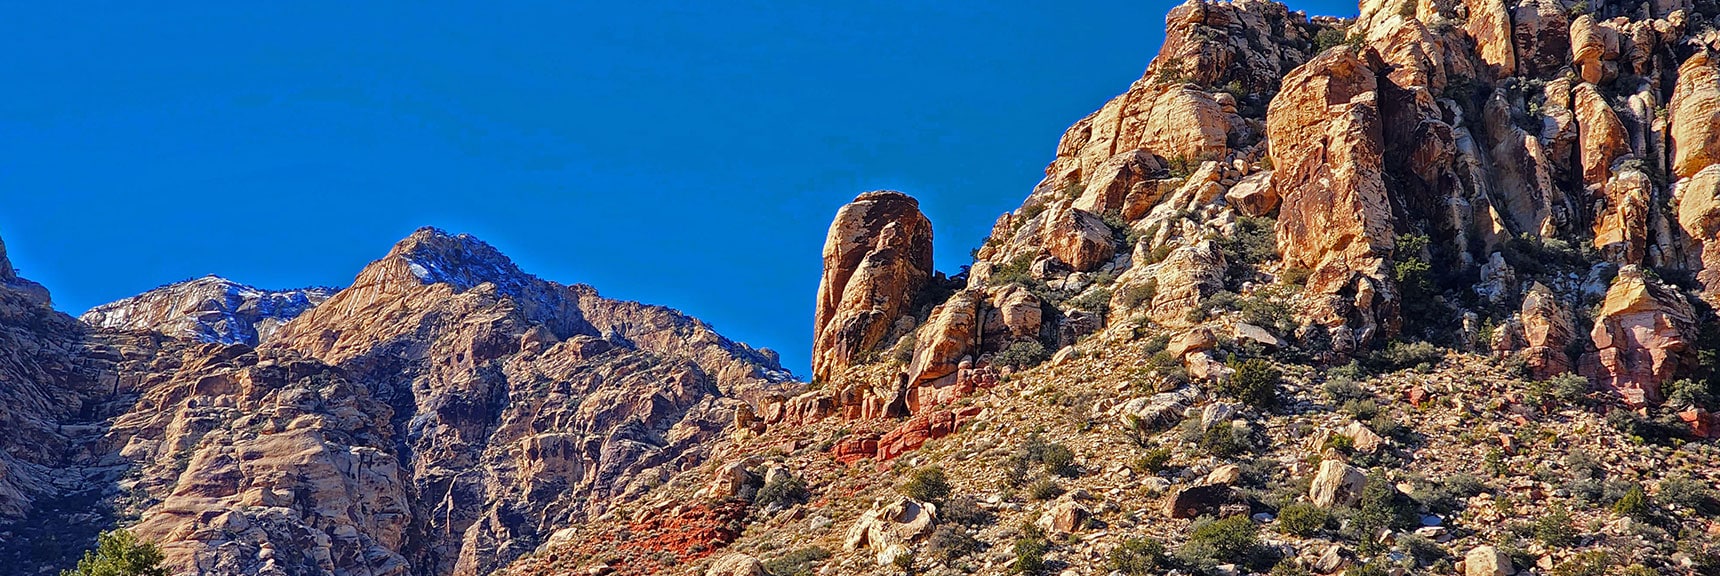 Pillar on SW White Rock Mountain. Buffalo Wall in Background | White Rock Mountain Loop Trail | Red Rock Canyon, Nevada